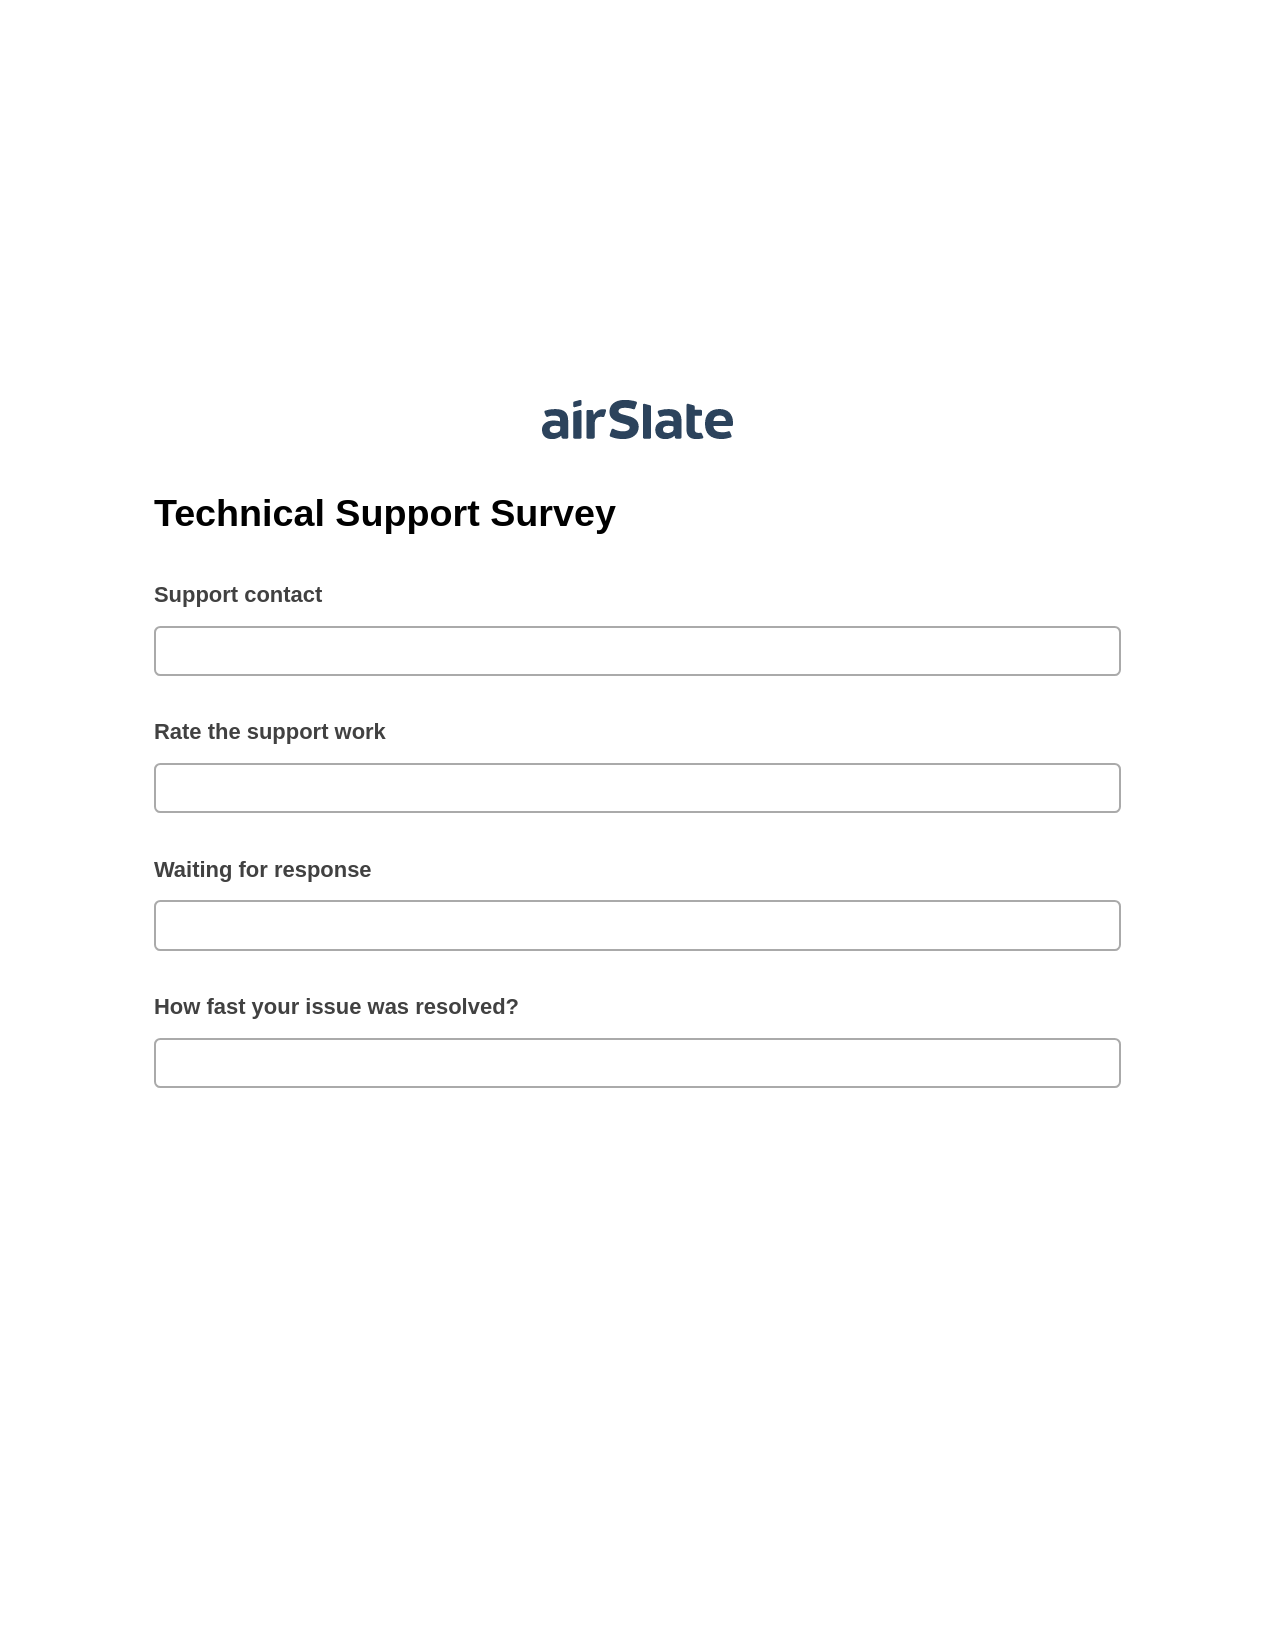 Technical Support Survey Prefill from NetSuite records, Jira Bot, Slack Notification Postfinish Bot